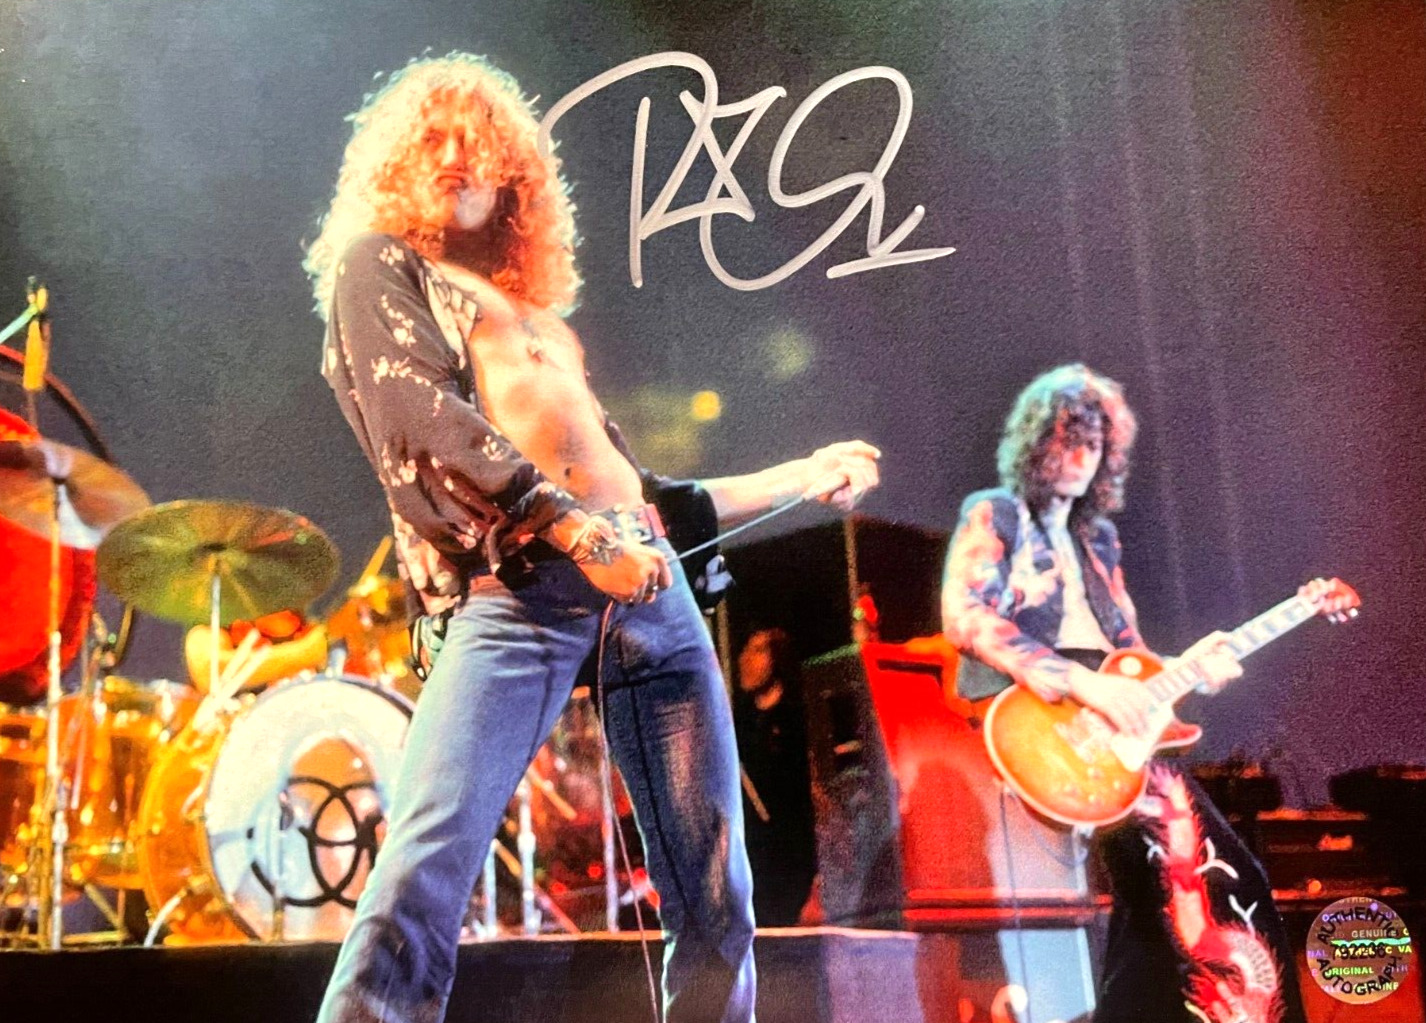 Robert Plant [LED ZEPPELIN] Signed 5x7 in. Autograph Original w/COA Certificate